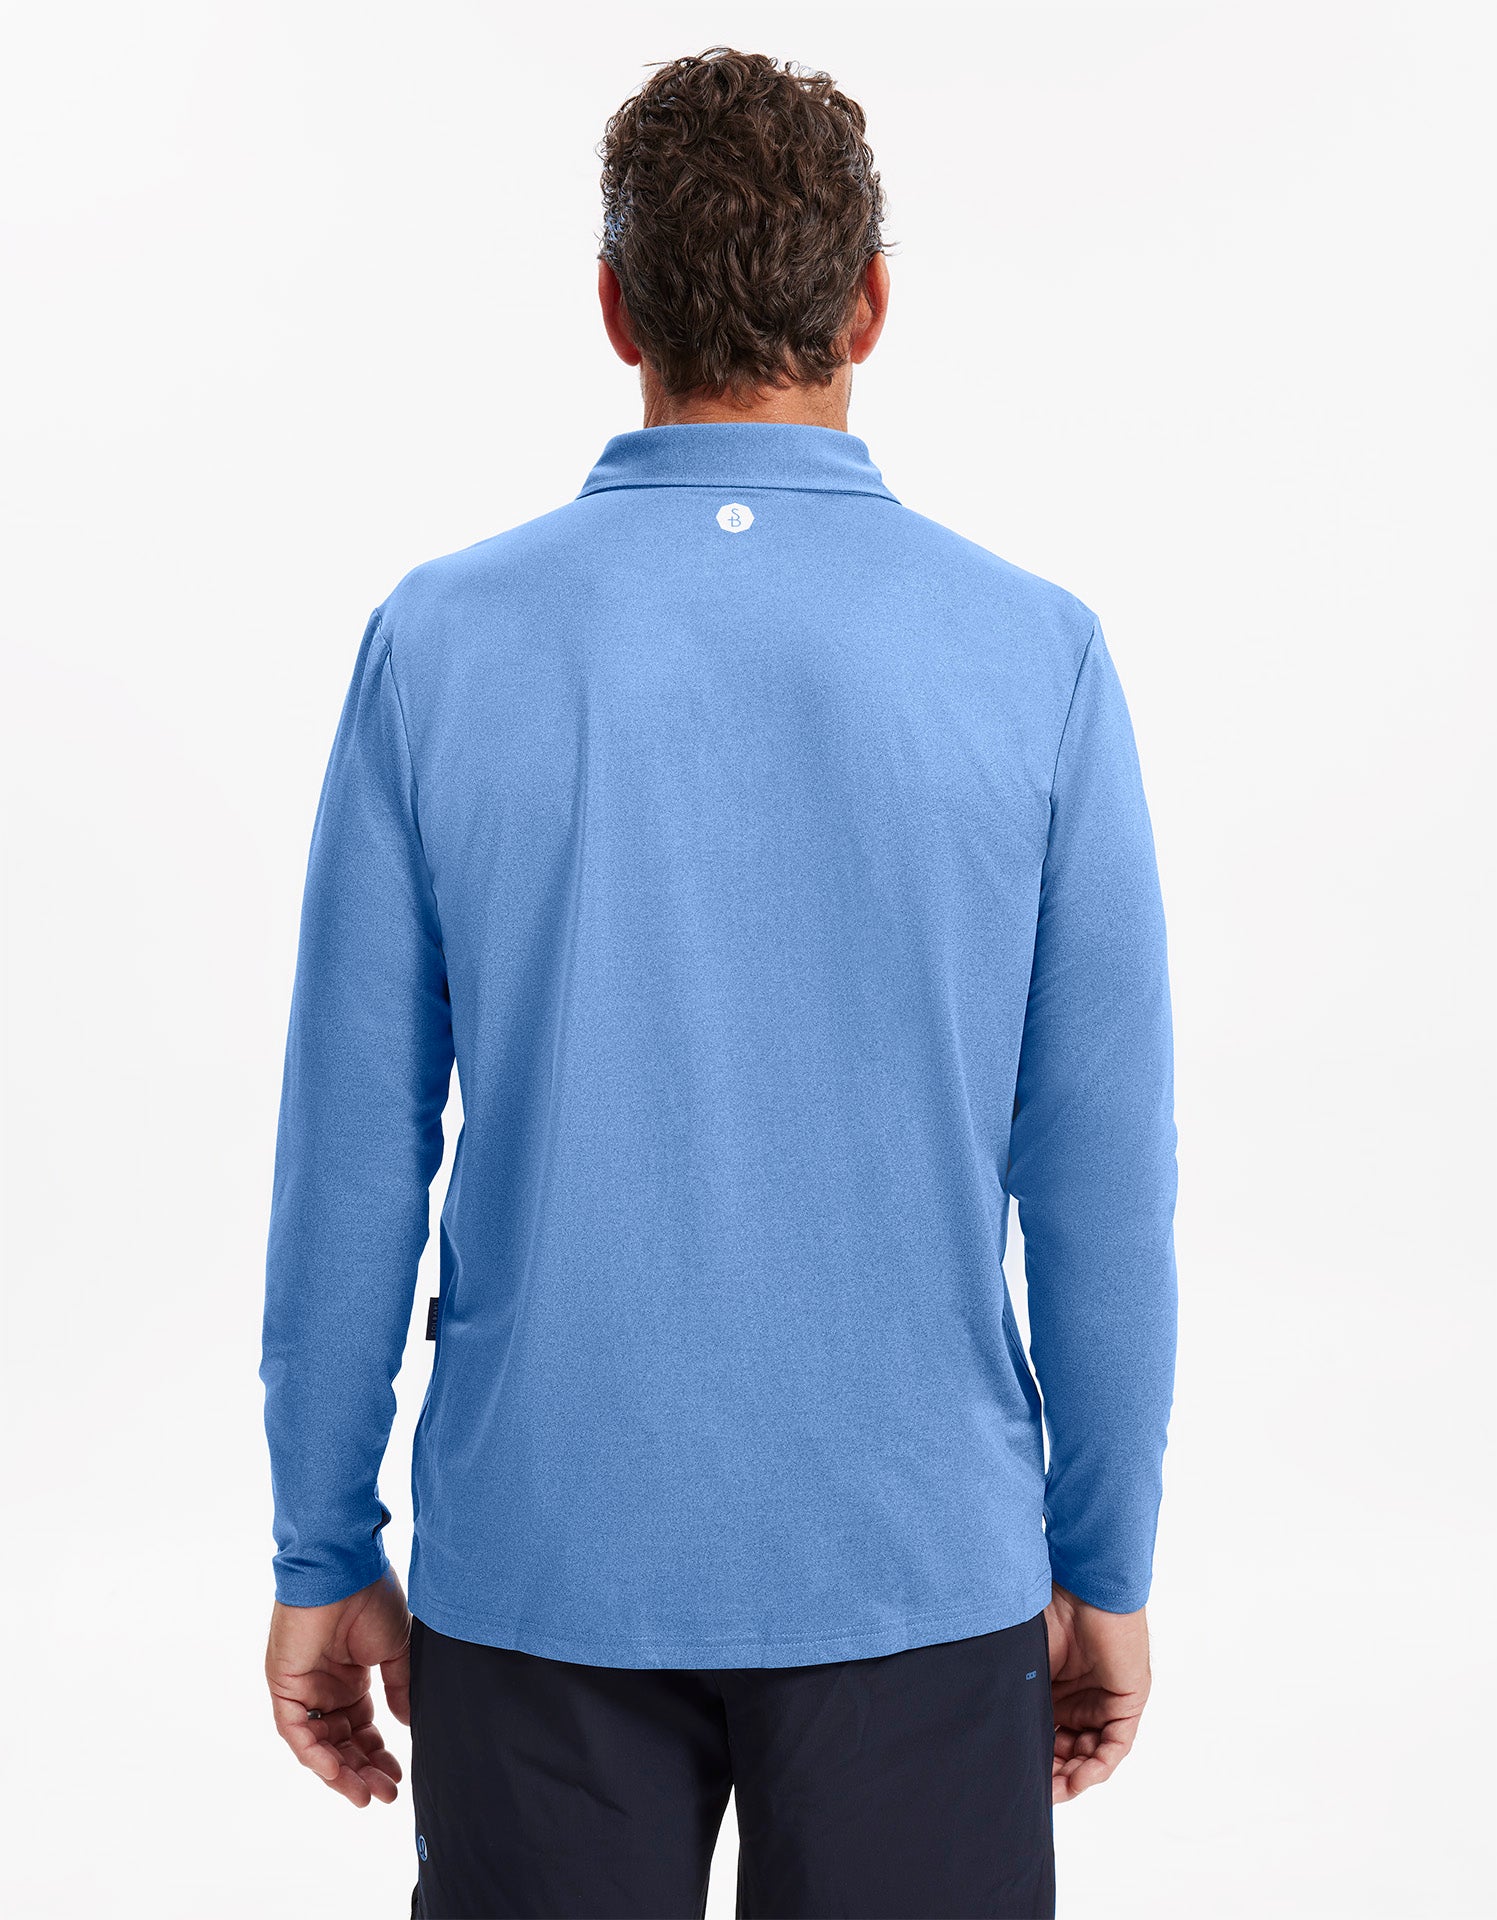 Men's Polo Shirt Long Sleeve Golf Shirts Lightweight UPF 50+ Sun Protection  Cool Shirts for Men Work Fishing Outdoor